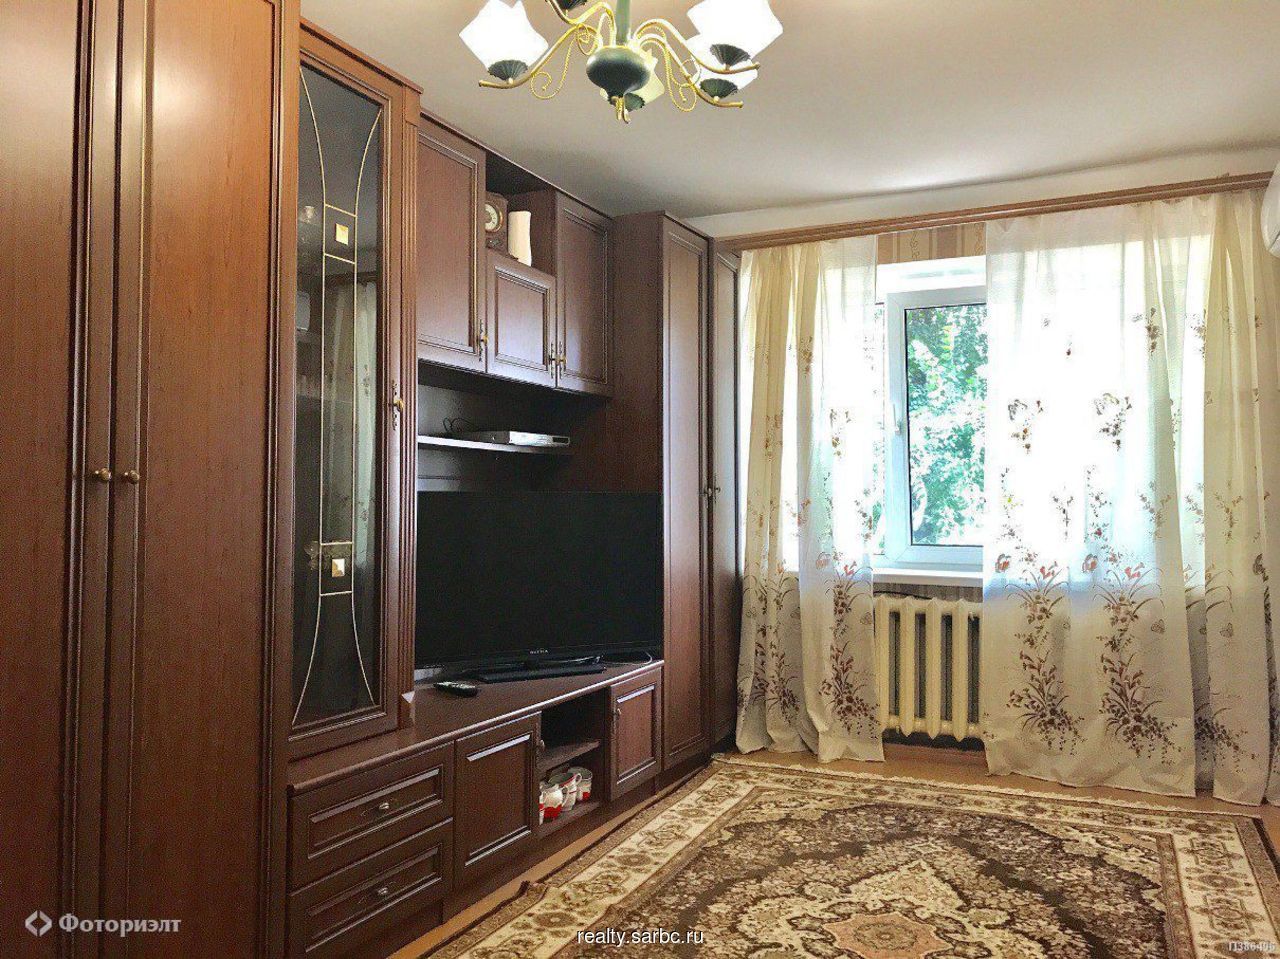 Показать квартиру на ул Чапаева 112 в Аткарске 2 комнатную квартиру